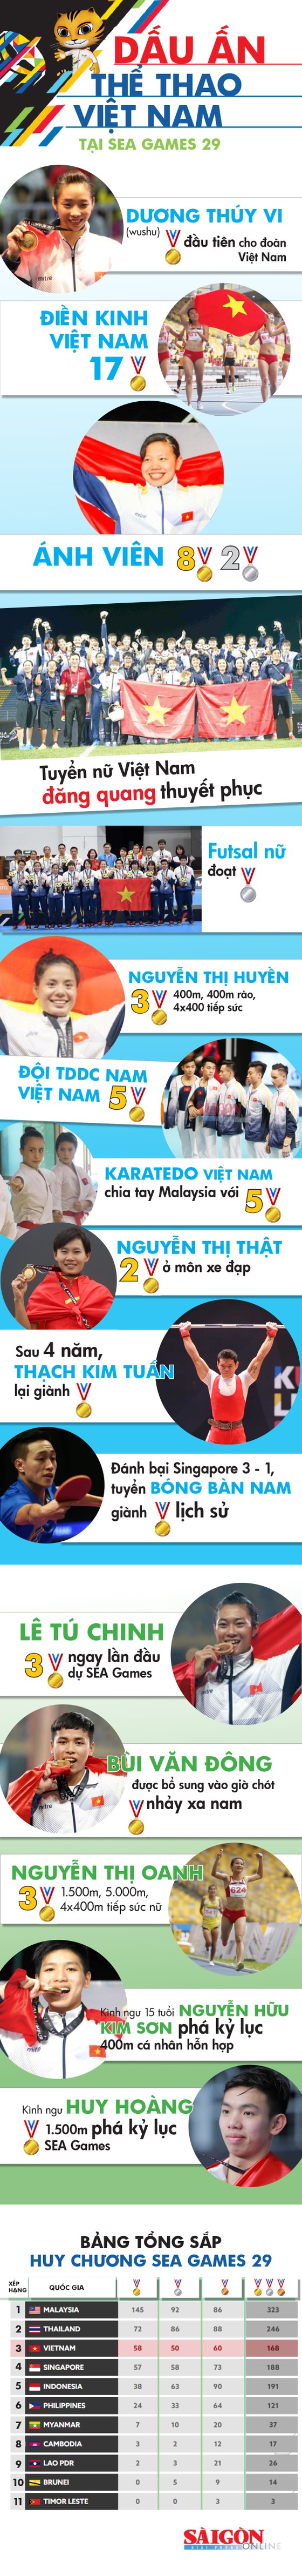 Dấu ấn Việt Nam tại SEA Games 29 ảnh 1